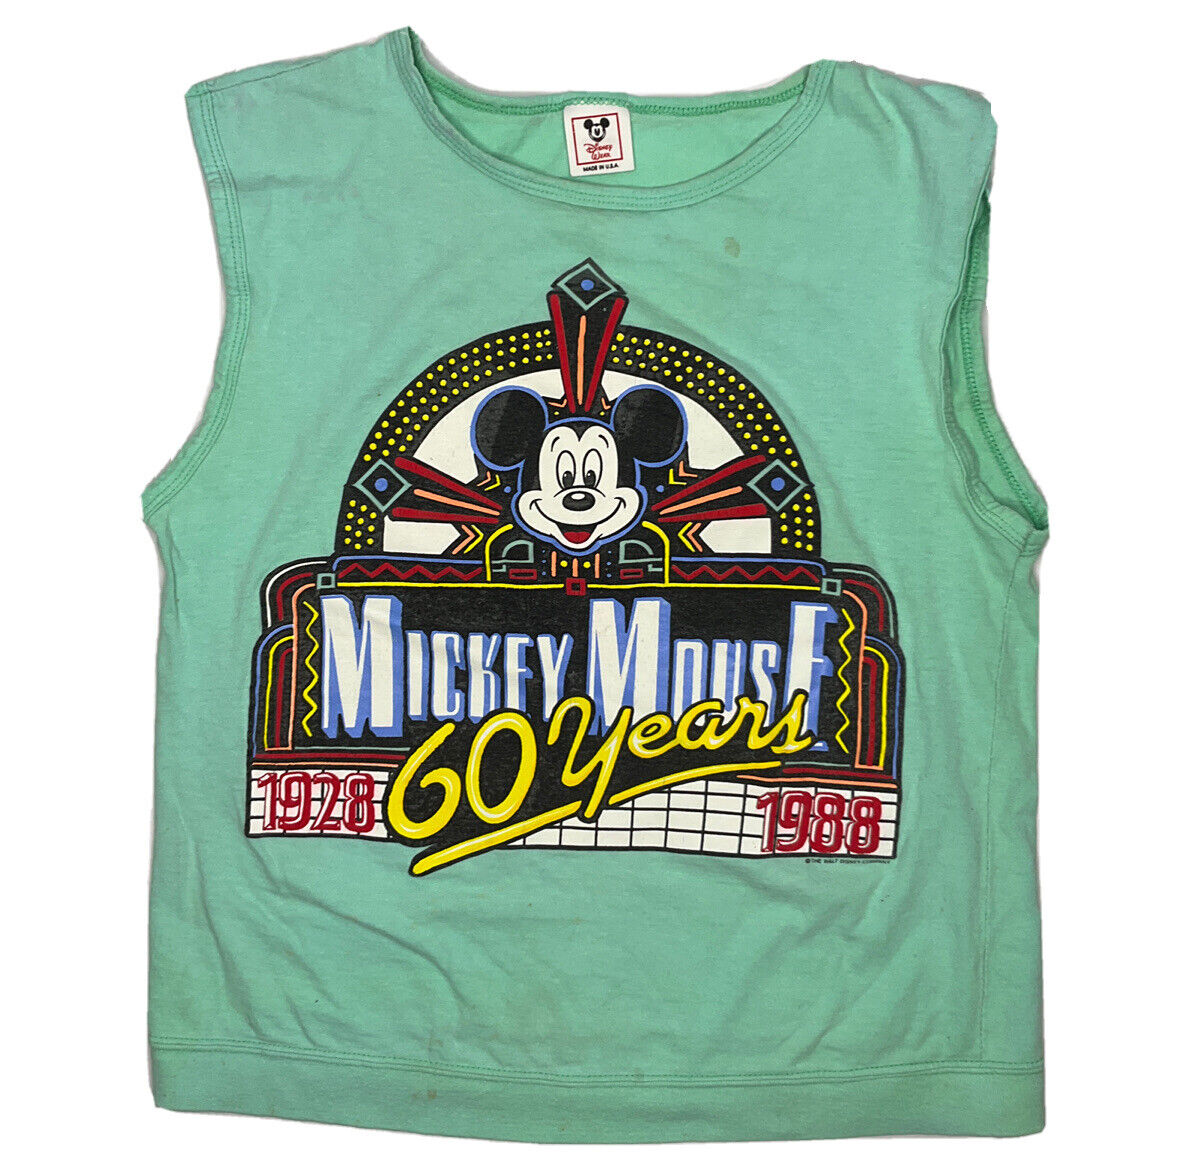 Vintage Disney Mickey Mouse T-Shirt 60 Years 1988 Sleeveless Retro Graphic Sz M